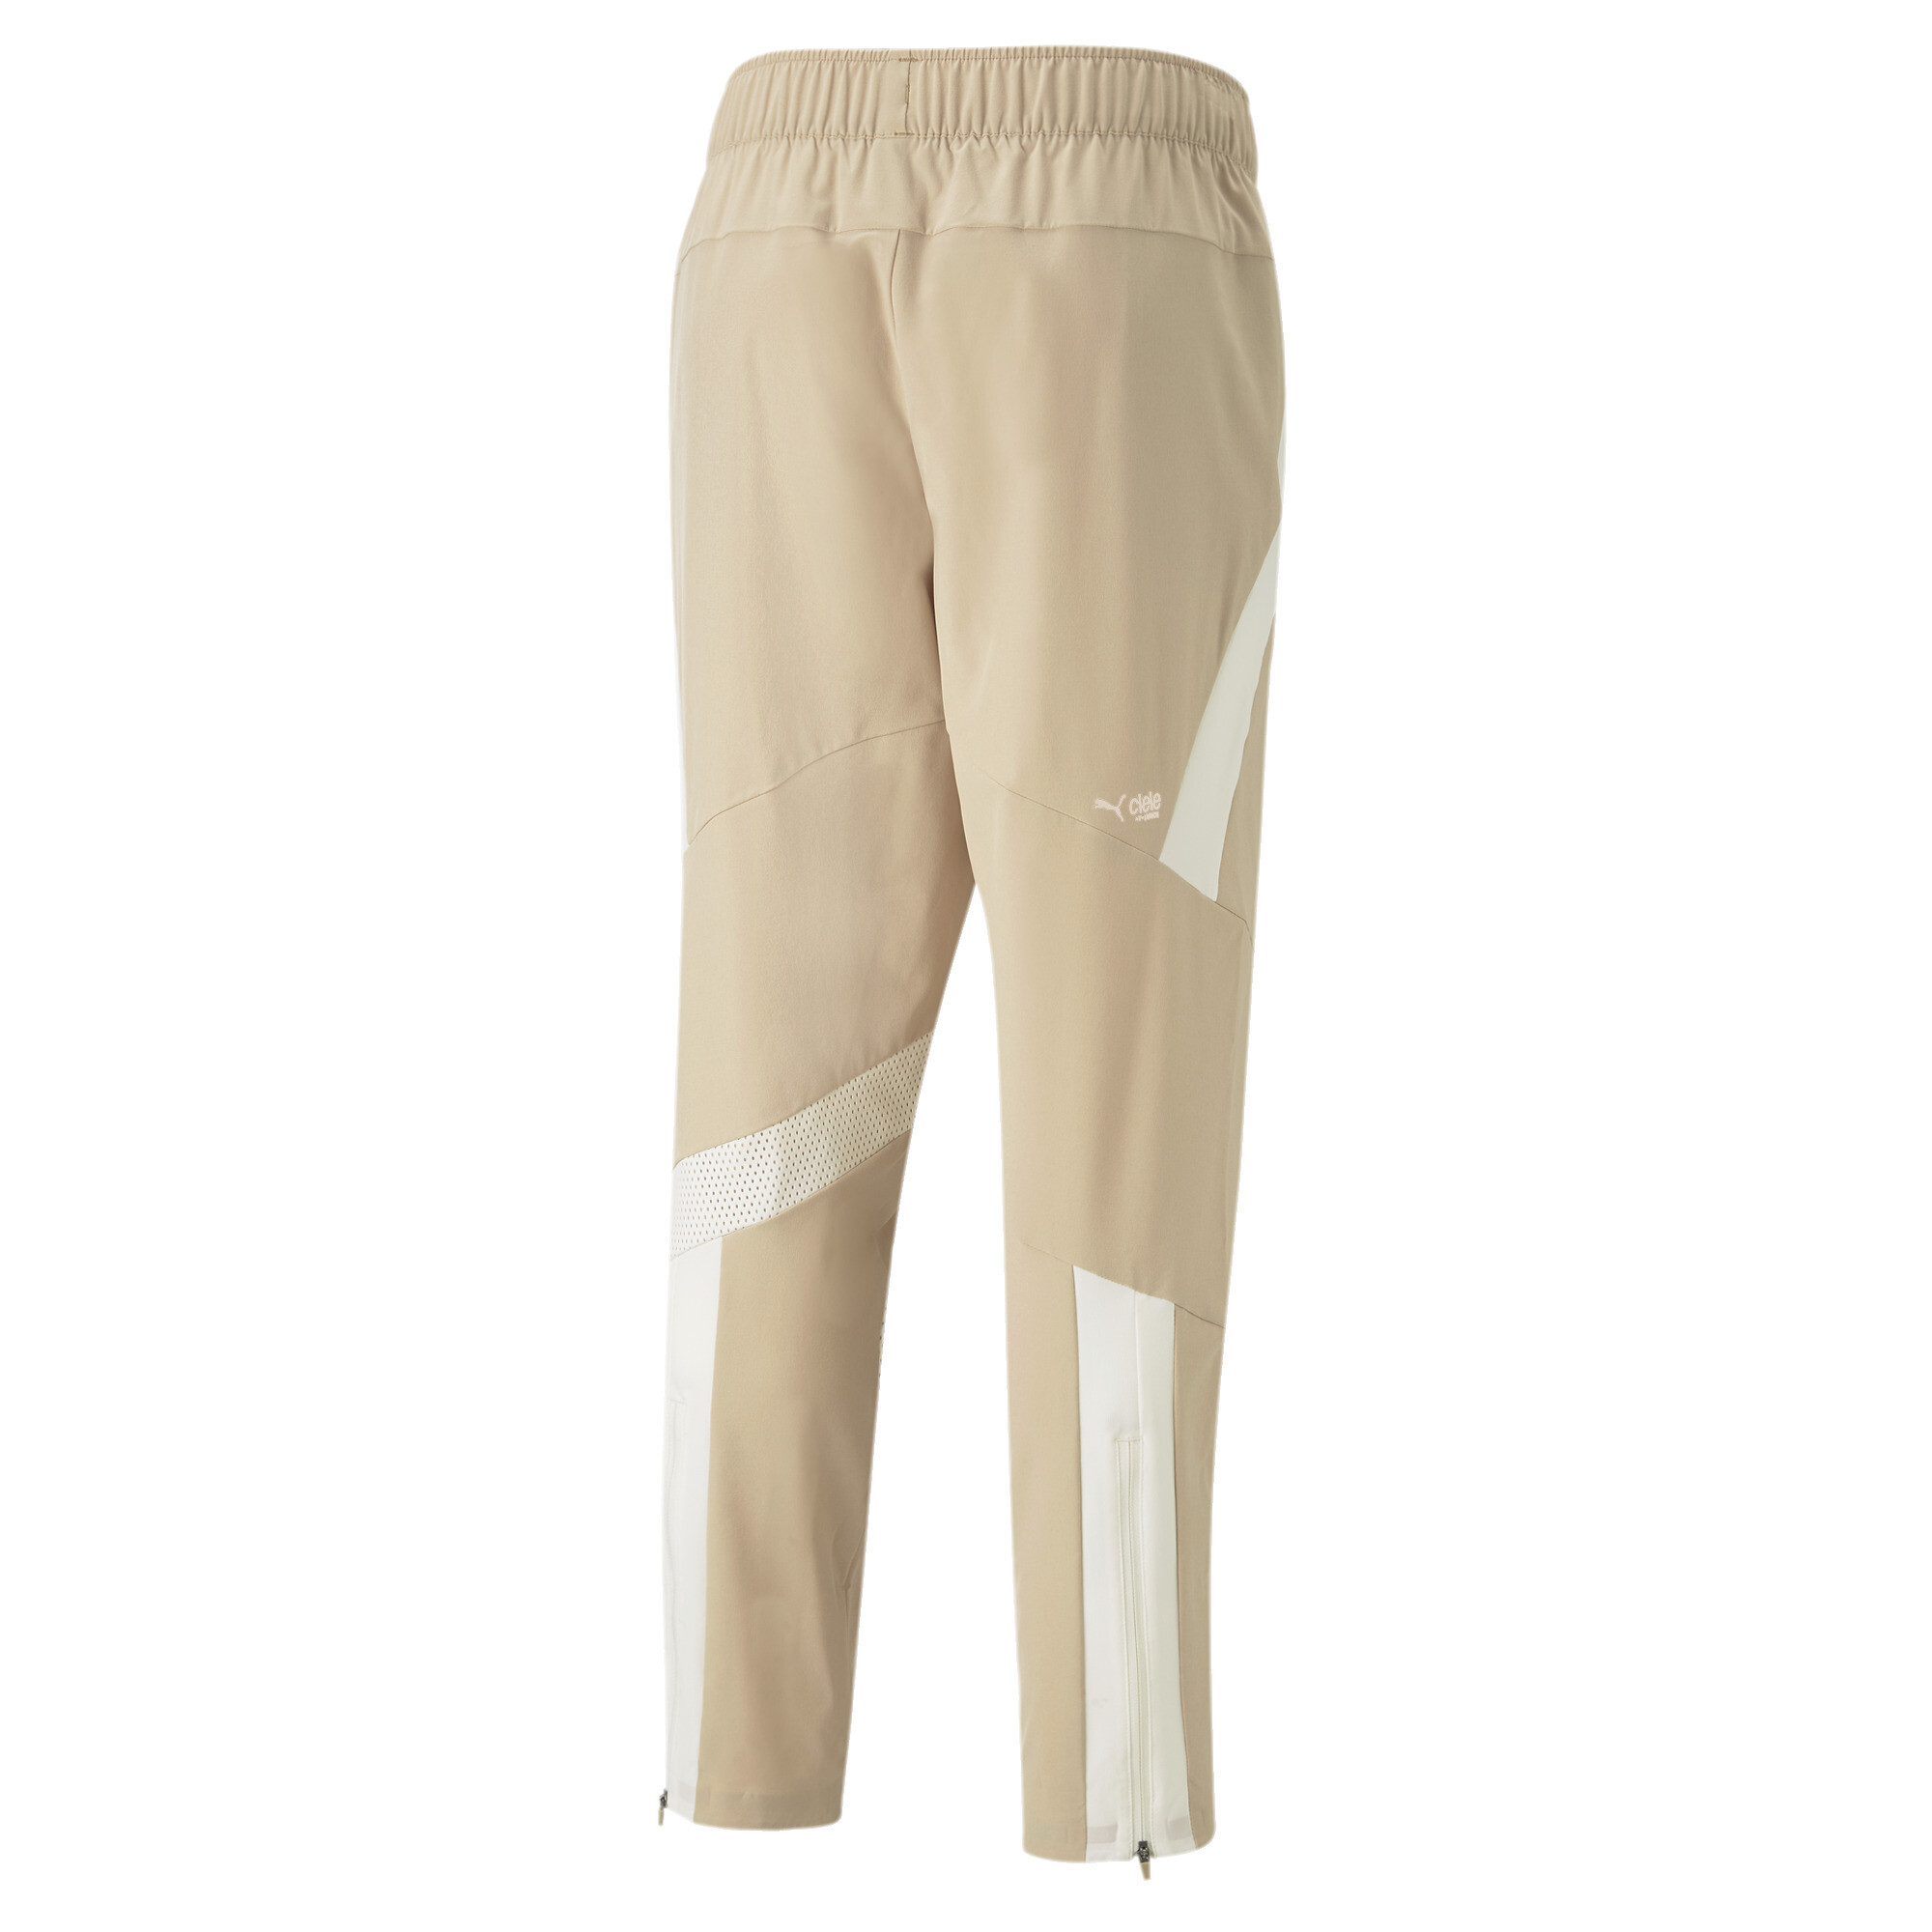 Men's Puma X CIELE Running Tracksuit Pants, Beige, Size XS, Clothing